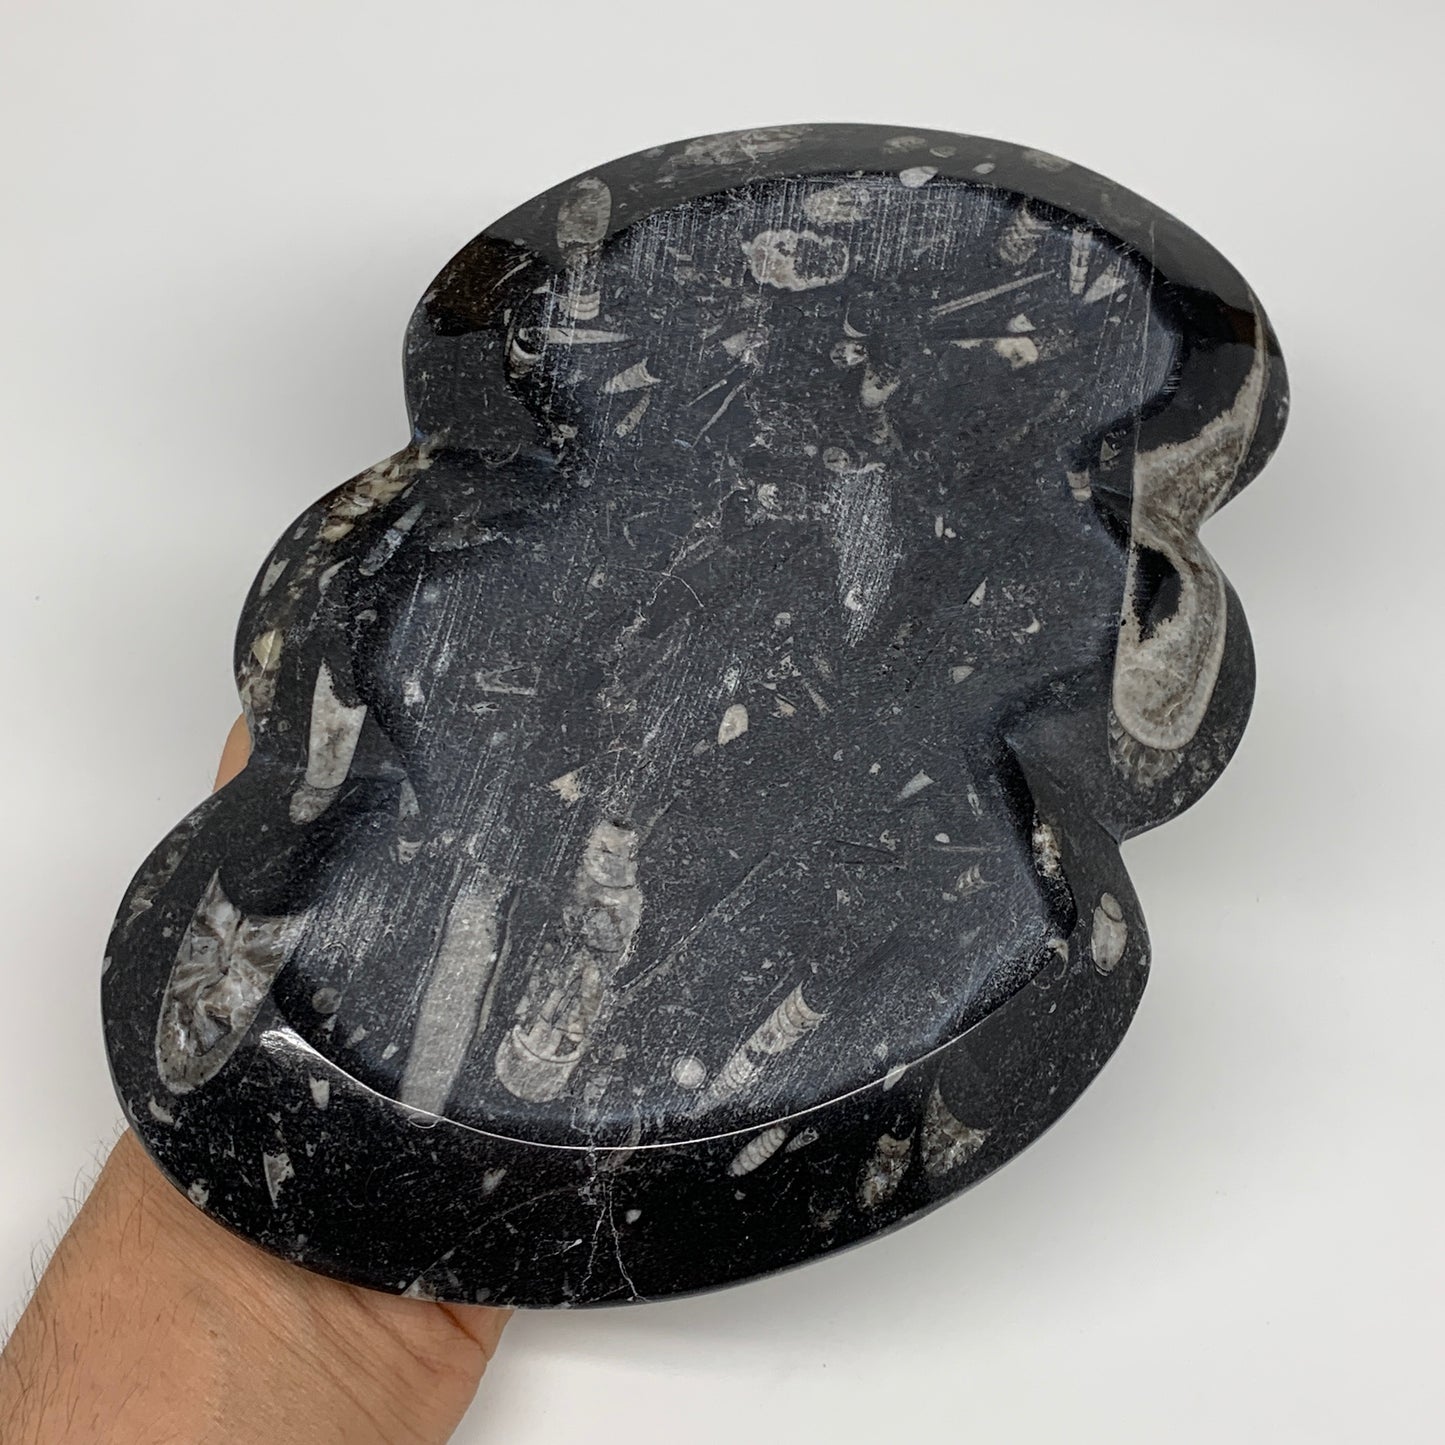 2pcs Set,8.5"x5.5" Double Heart Fossils Orthoceras Ammonite Bowls @Morocco,B8518